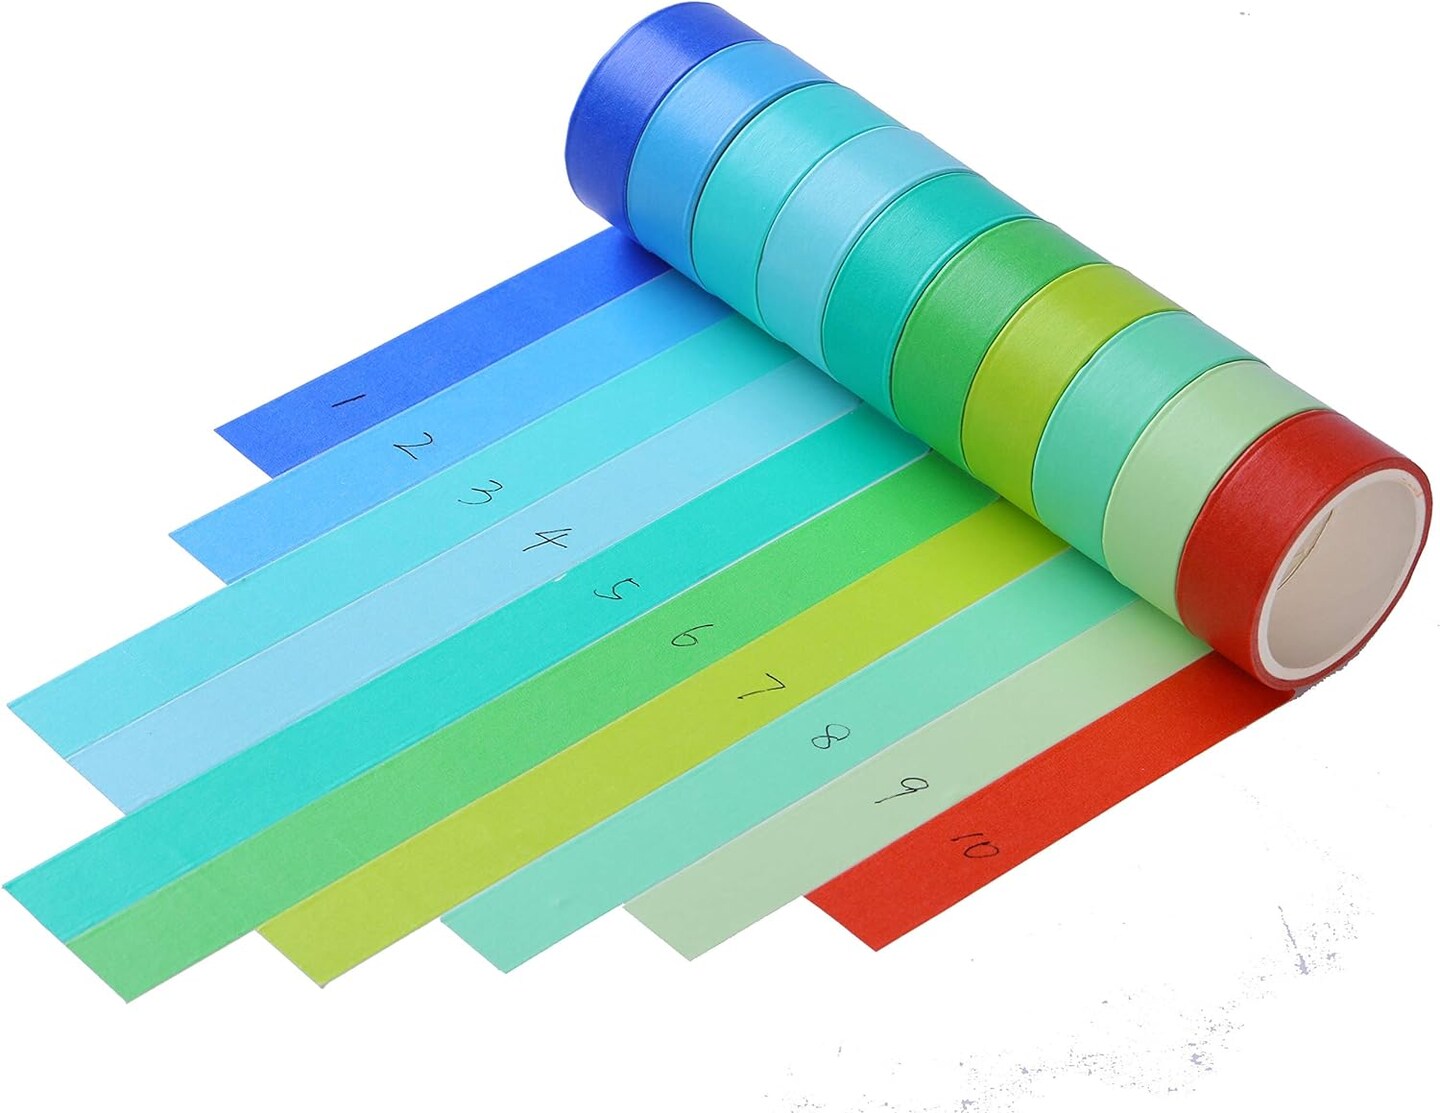 30 Rolls Washi Masking Tape Set, 15mm Wide Colorful Rainbow, Decorative Writable Craft Tape for DIY Scrapbook Designs